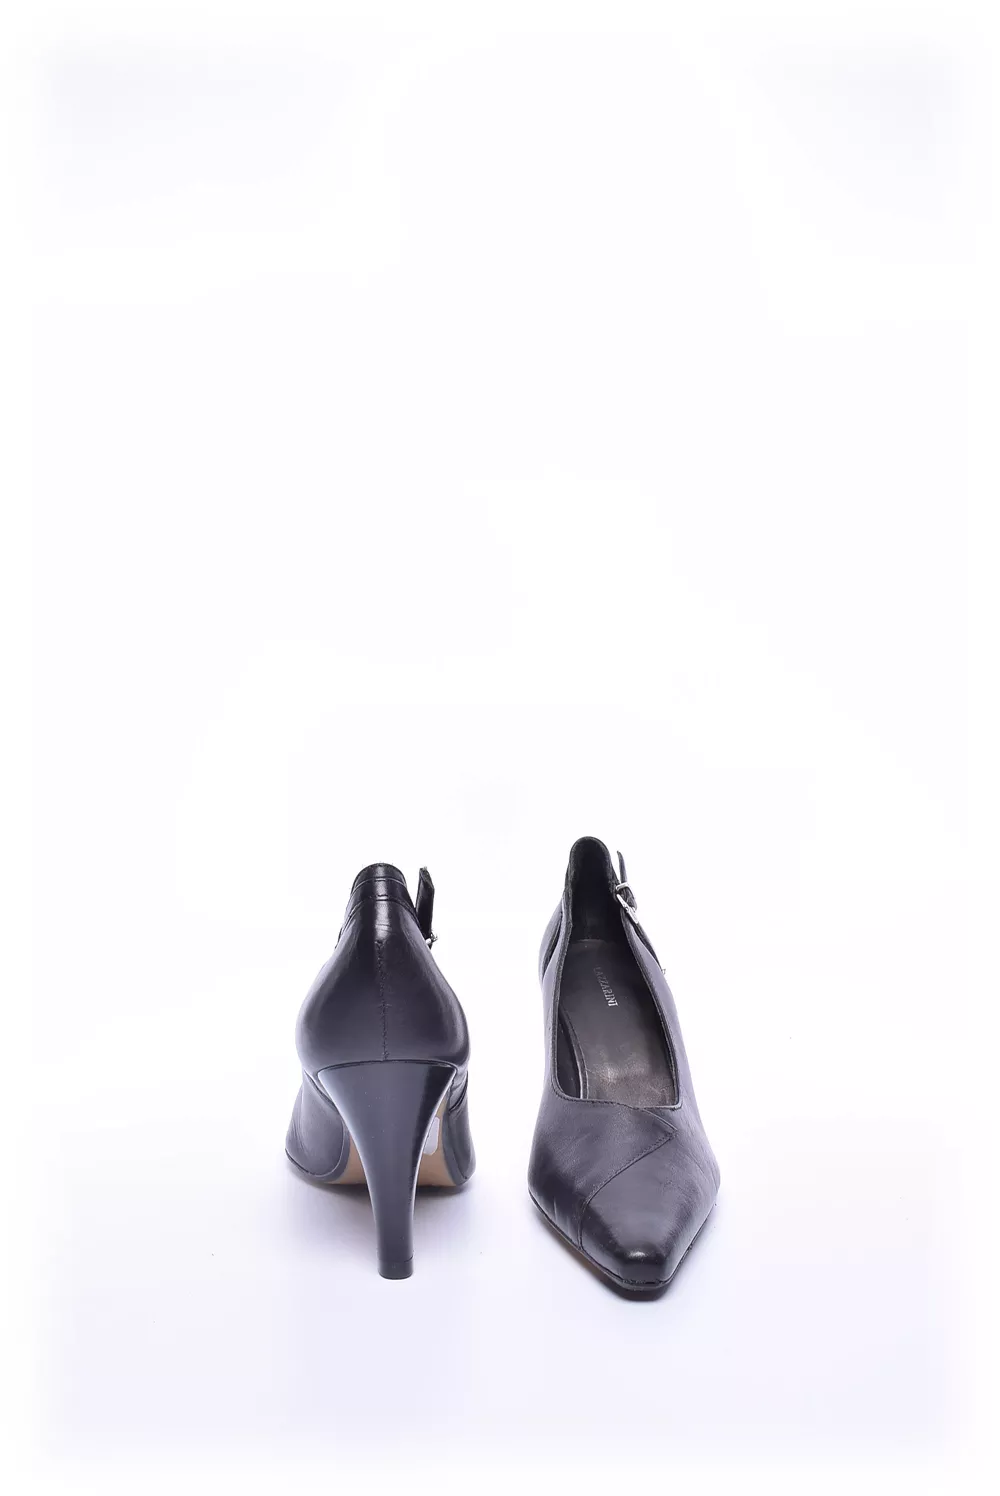 Pantofi stiletto dama [4]